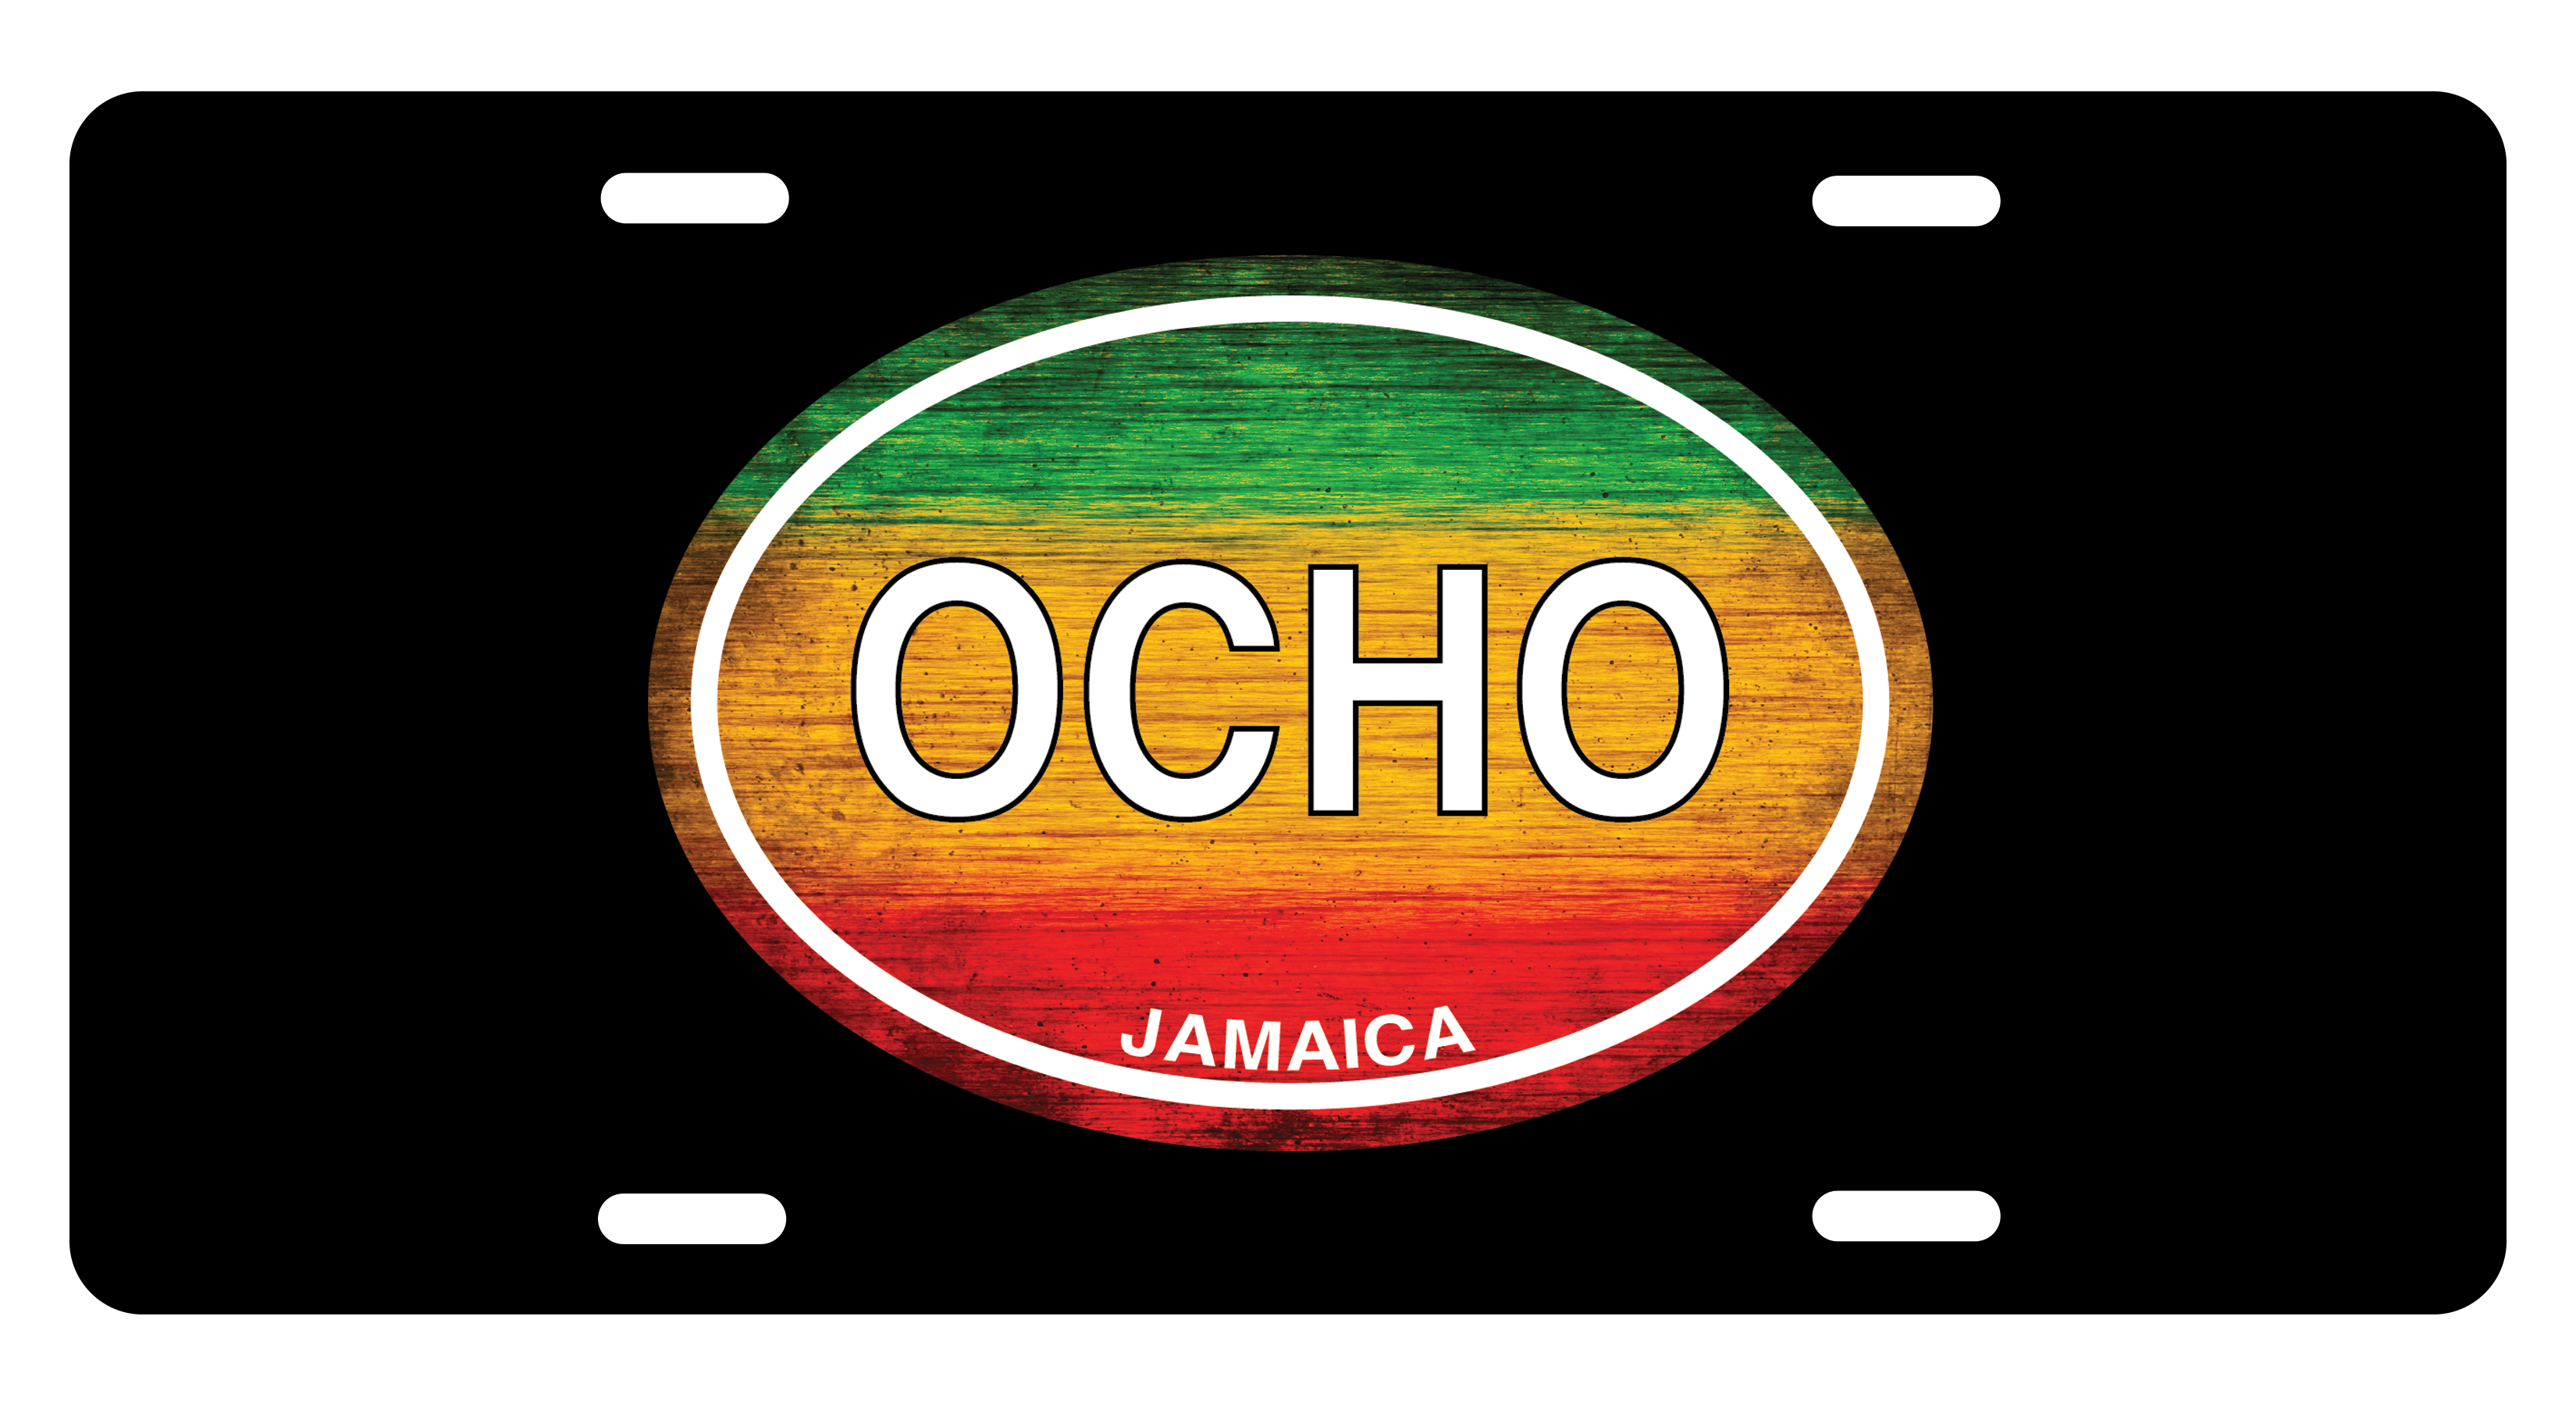 Ocho Rios Rasta Logo License Plates - My Destination Location